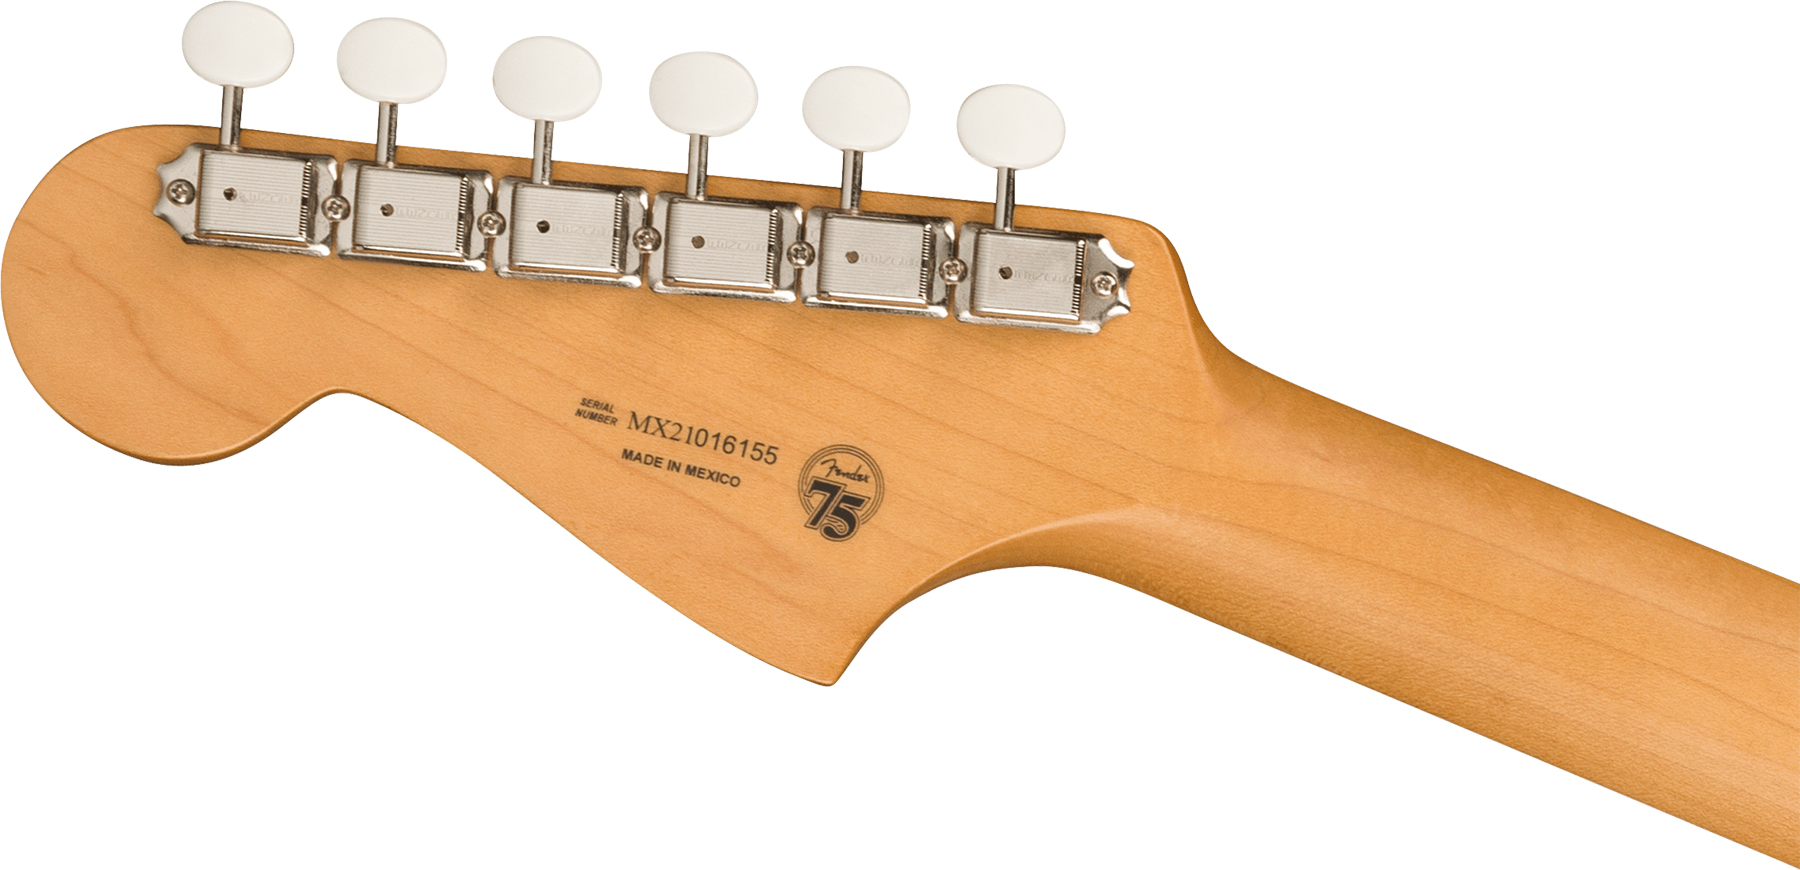 Fender Jazzmaster Gold Foil Ltd Mex 3mh Trem Bigsby Eb - Shoreline Gold - Retro-rock elektrische gitaar - Variation 3